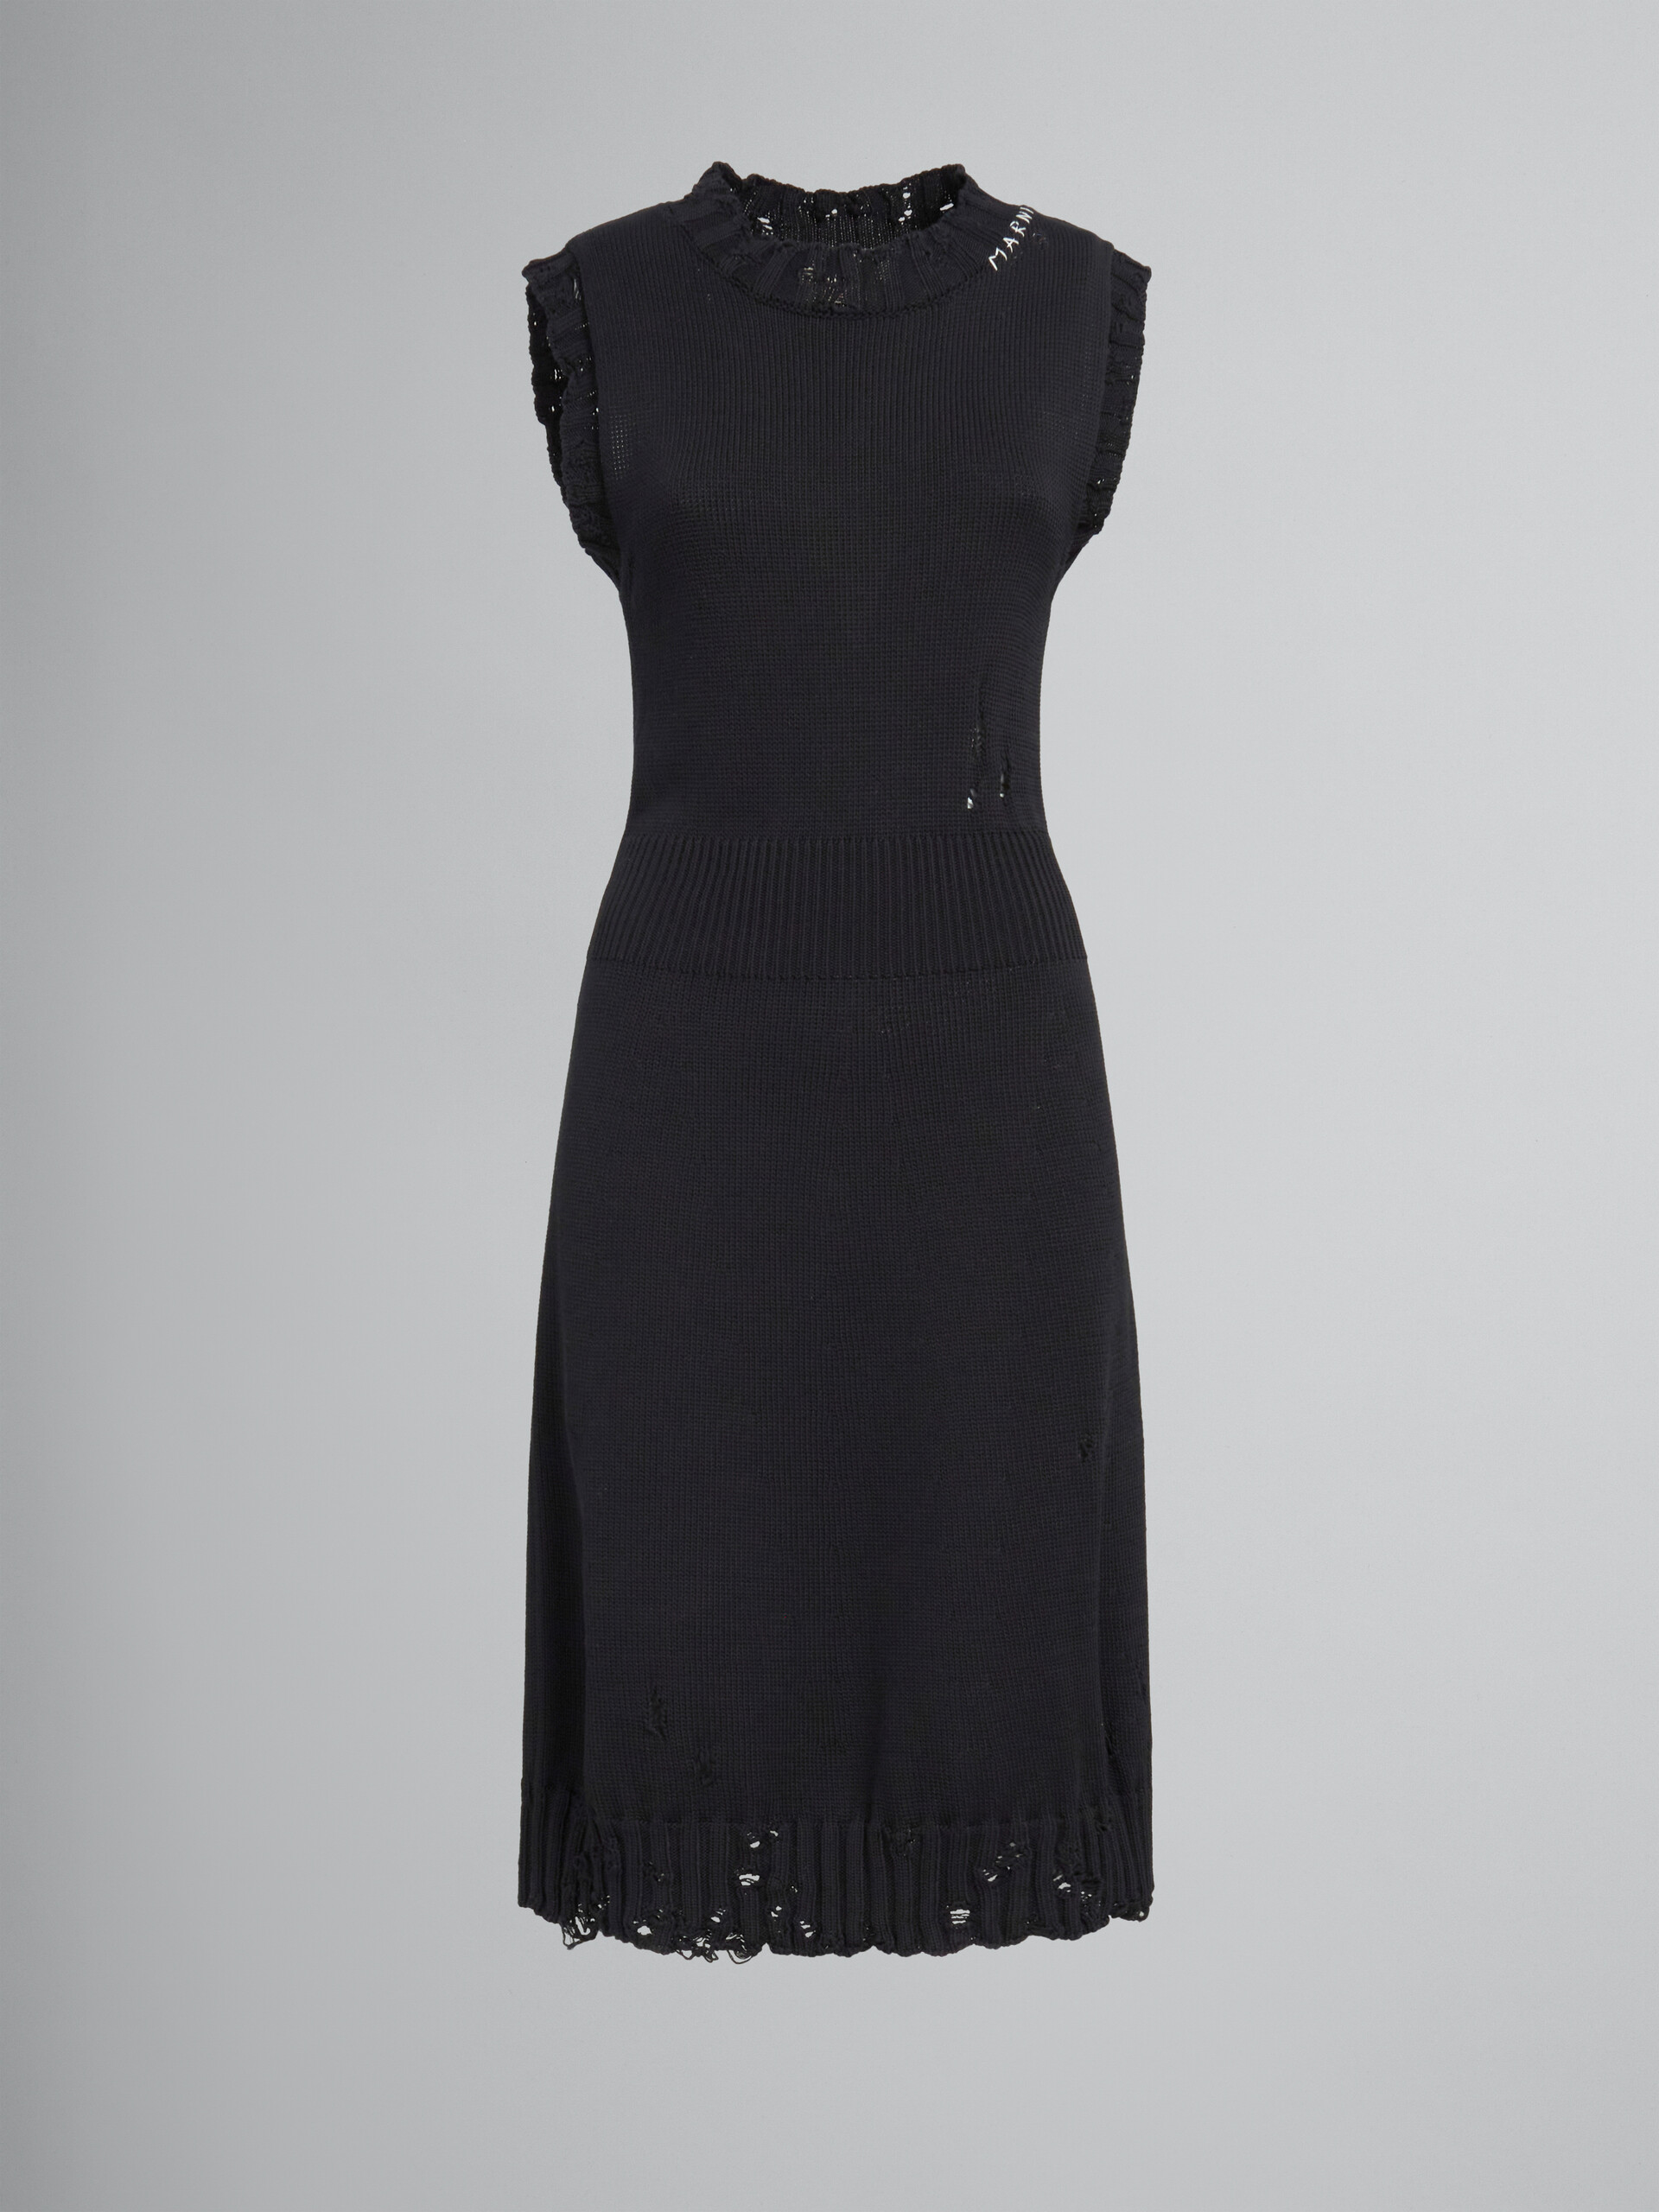 Black dishevelled cotton knitted dress - Dresses - Image 1